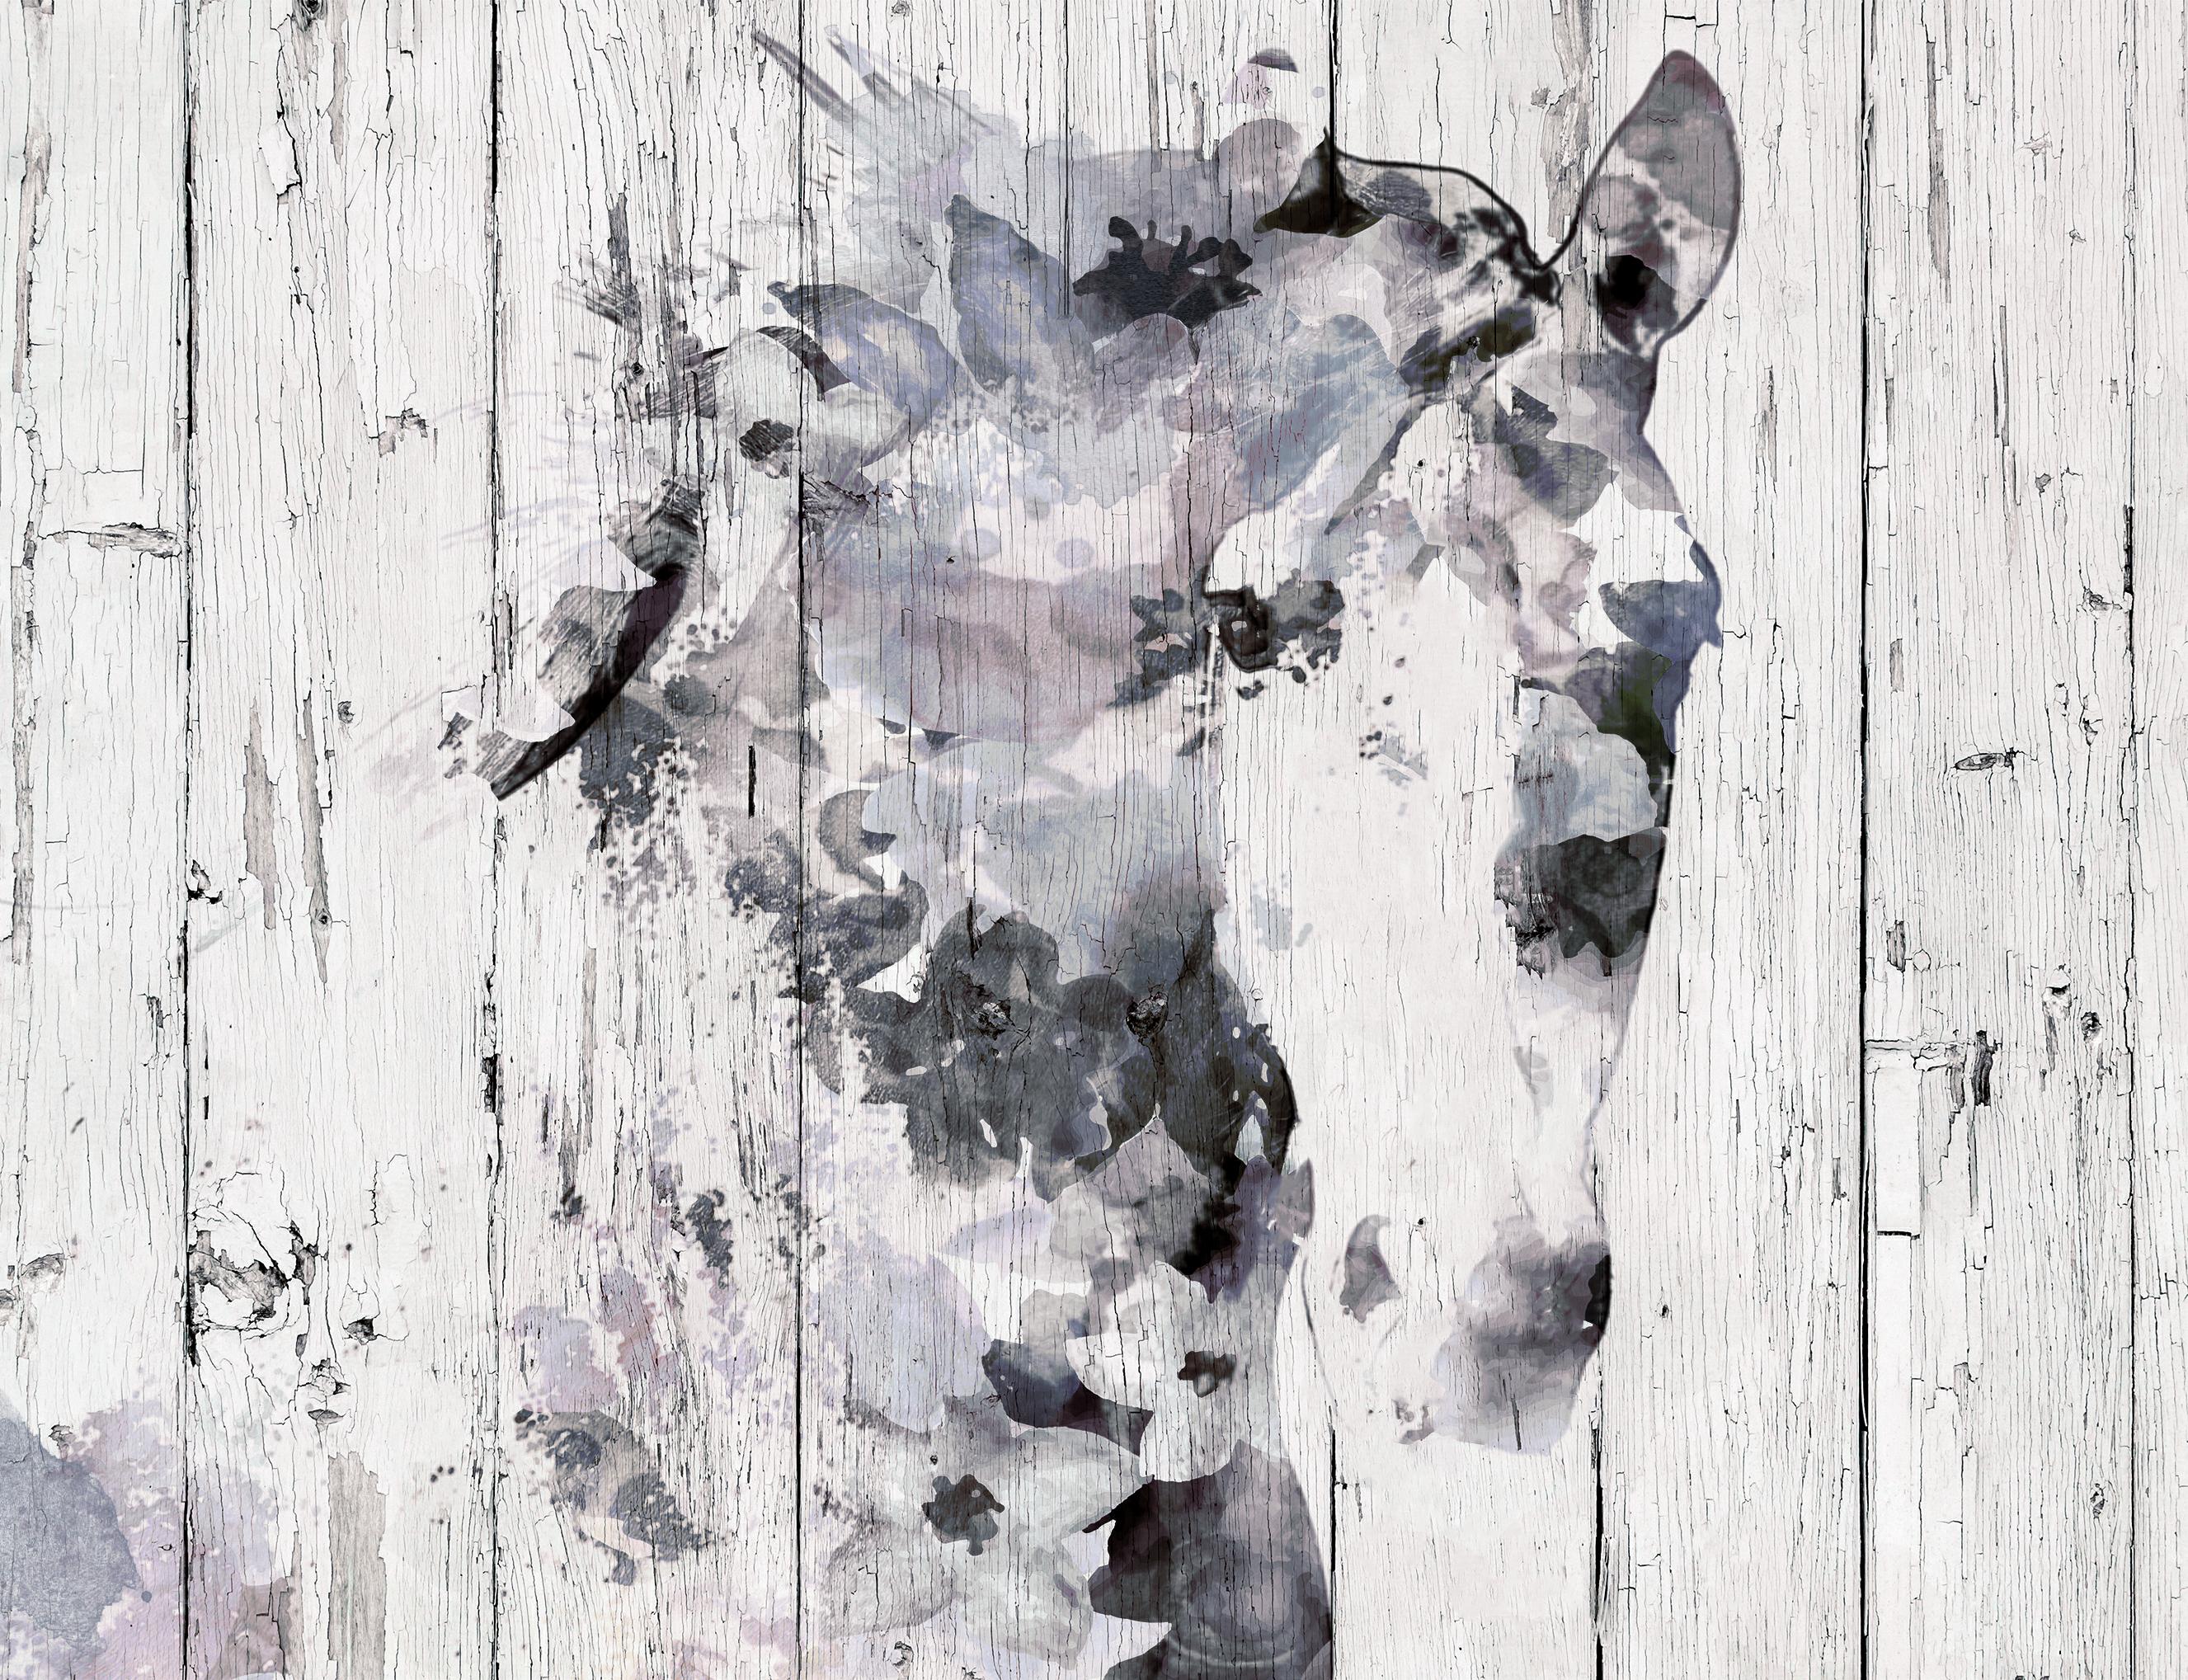 Irena Orlov Animal Painting - Horse Farmhouse Pink Purple White Mixed Media Painting on Canvas 48 x 36"